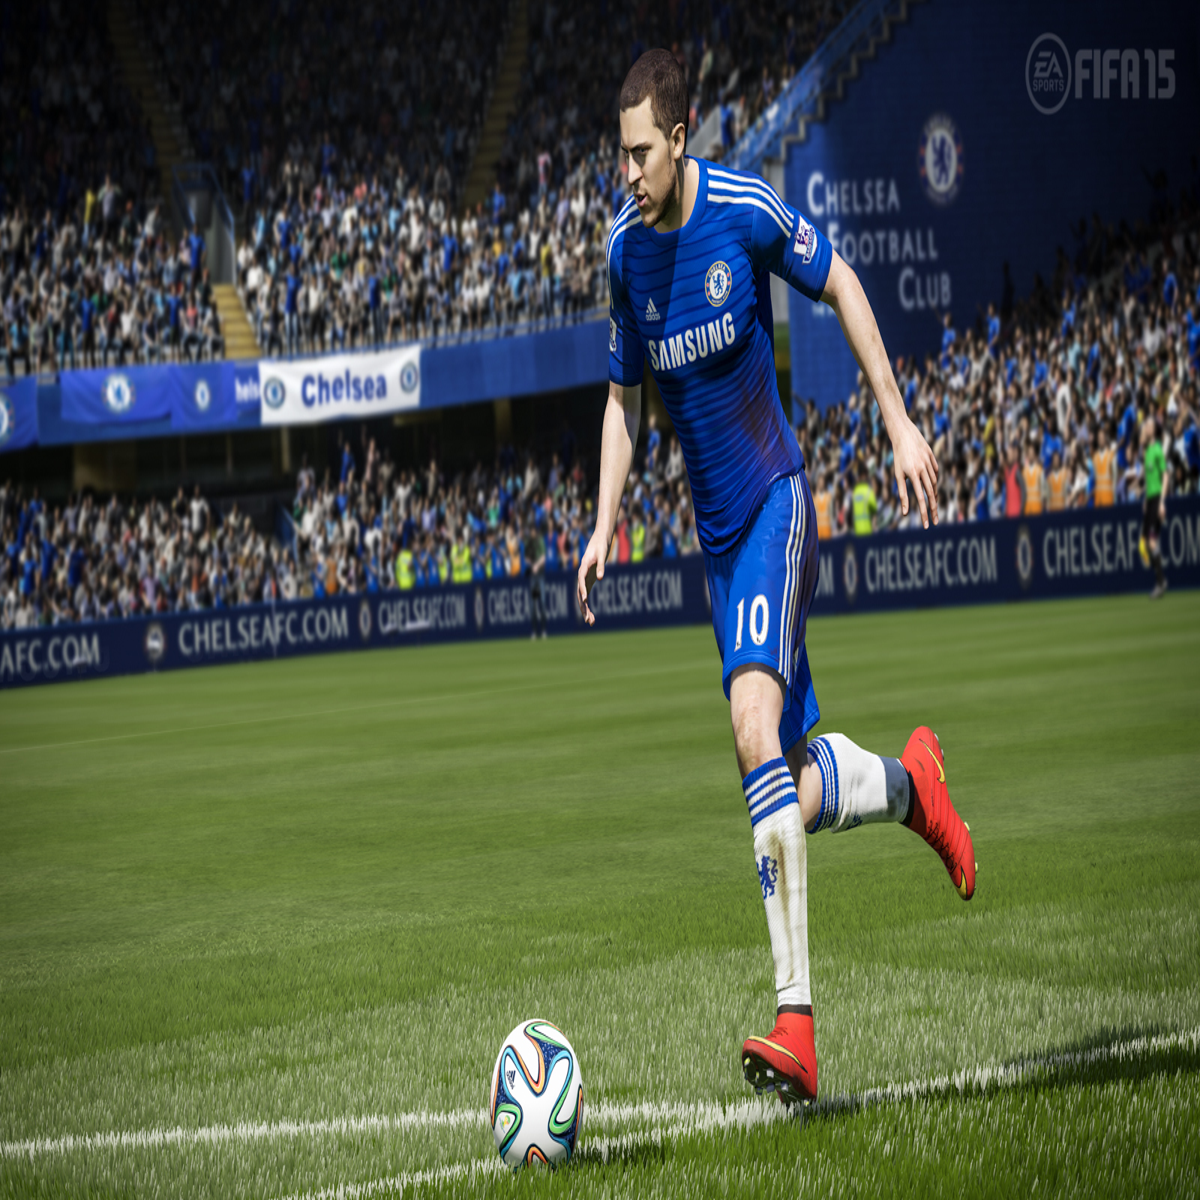 FIFA 15 Playstation 3 PS3 Used